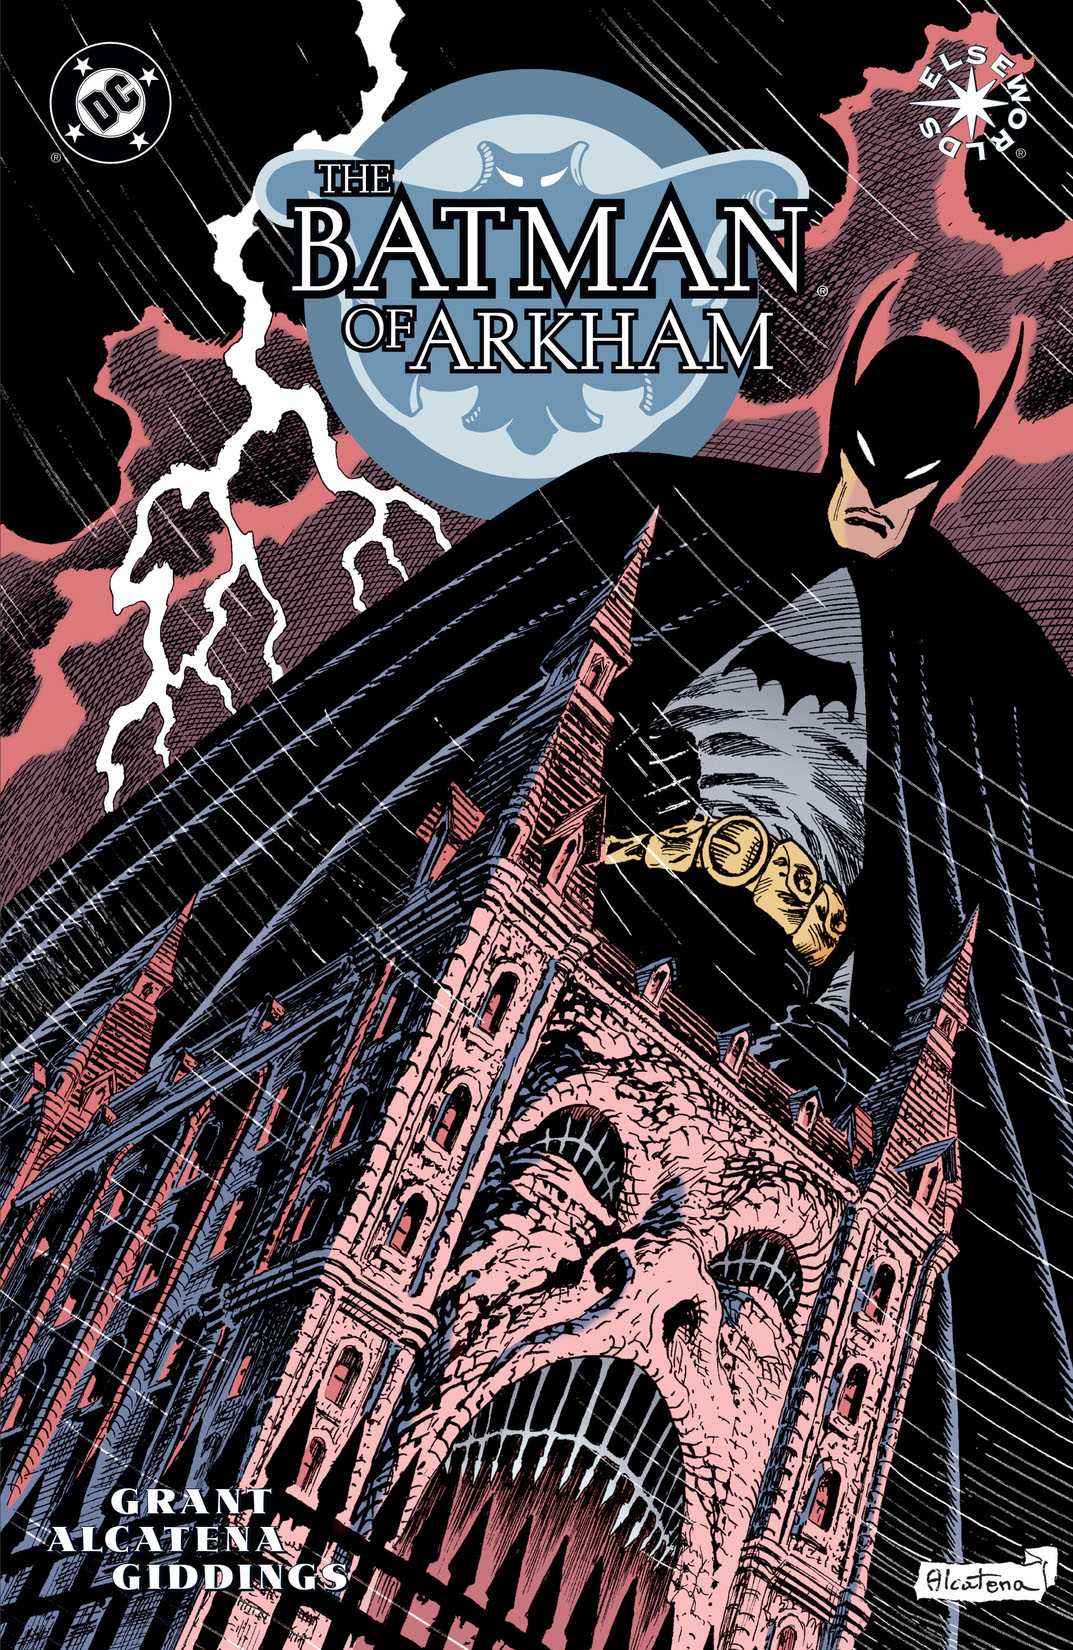 The Batman of Arkham #1 preview images